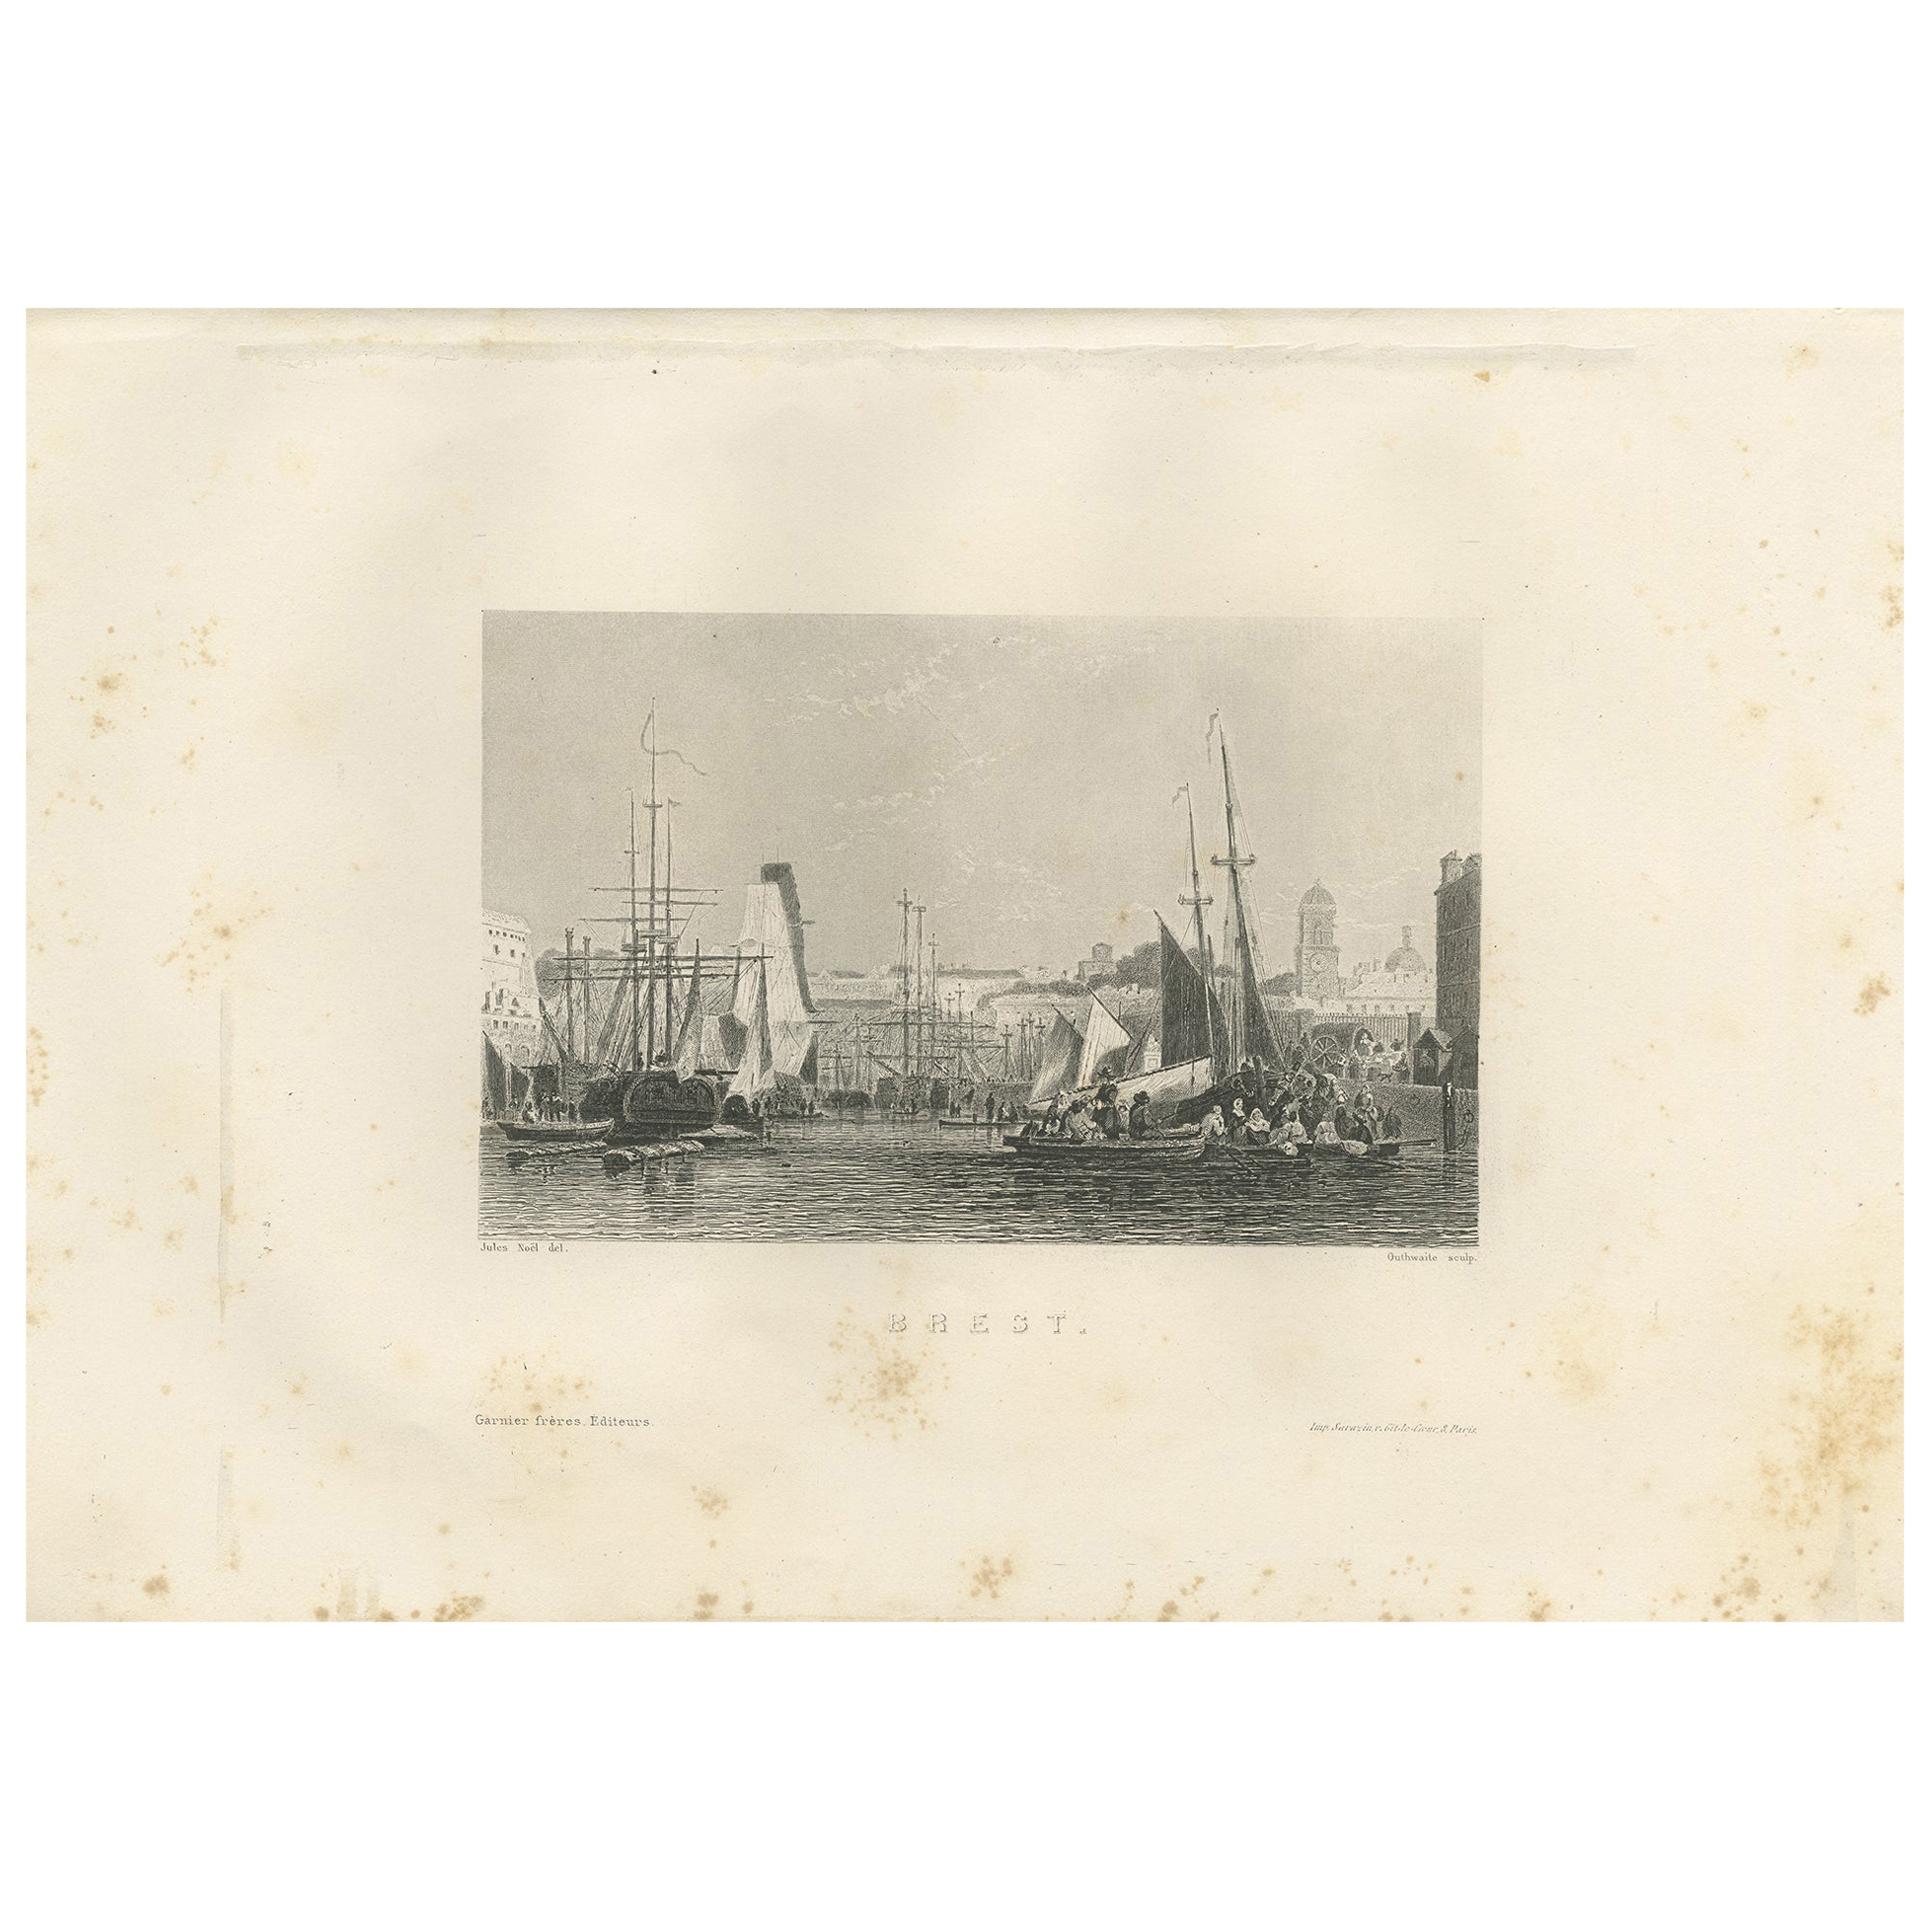 Antique Print of the City of Brest by Grégoire '1883'